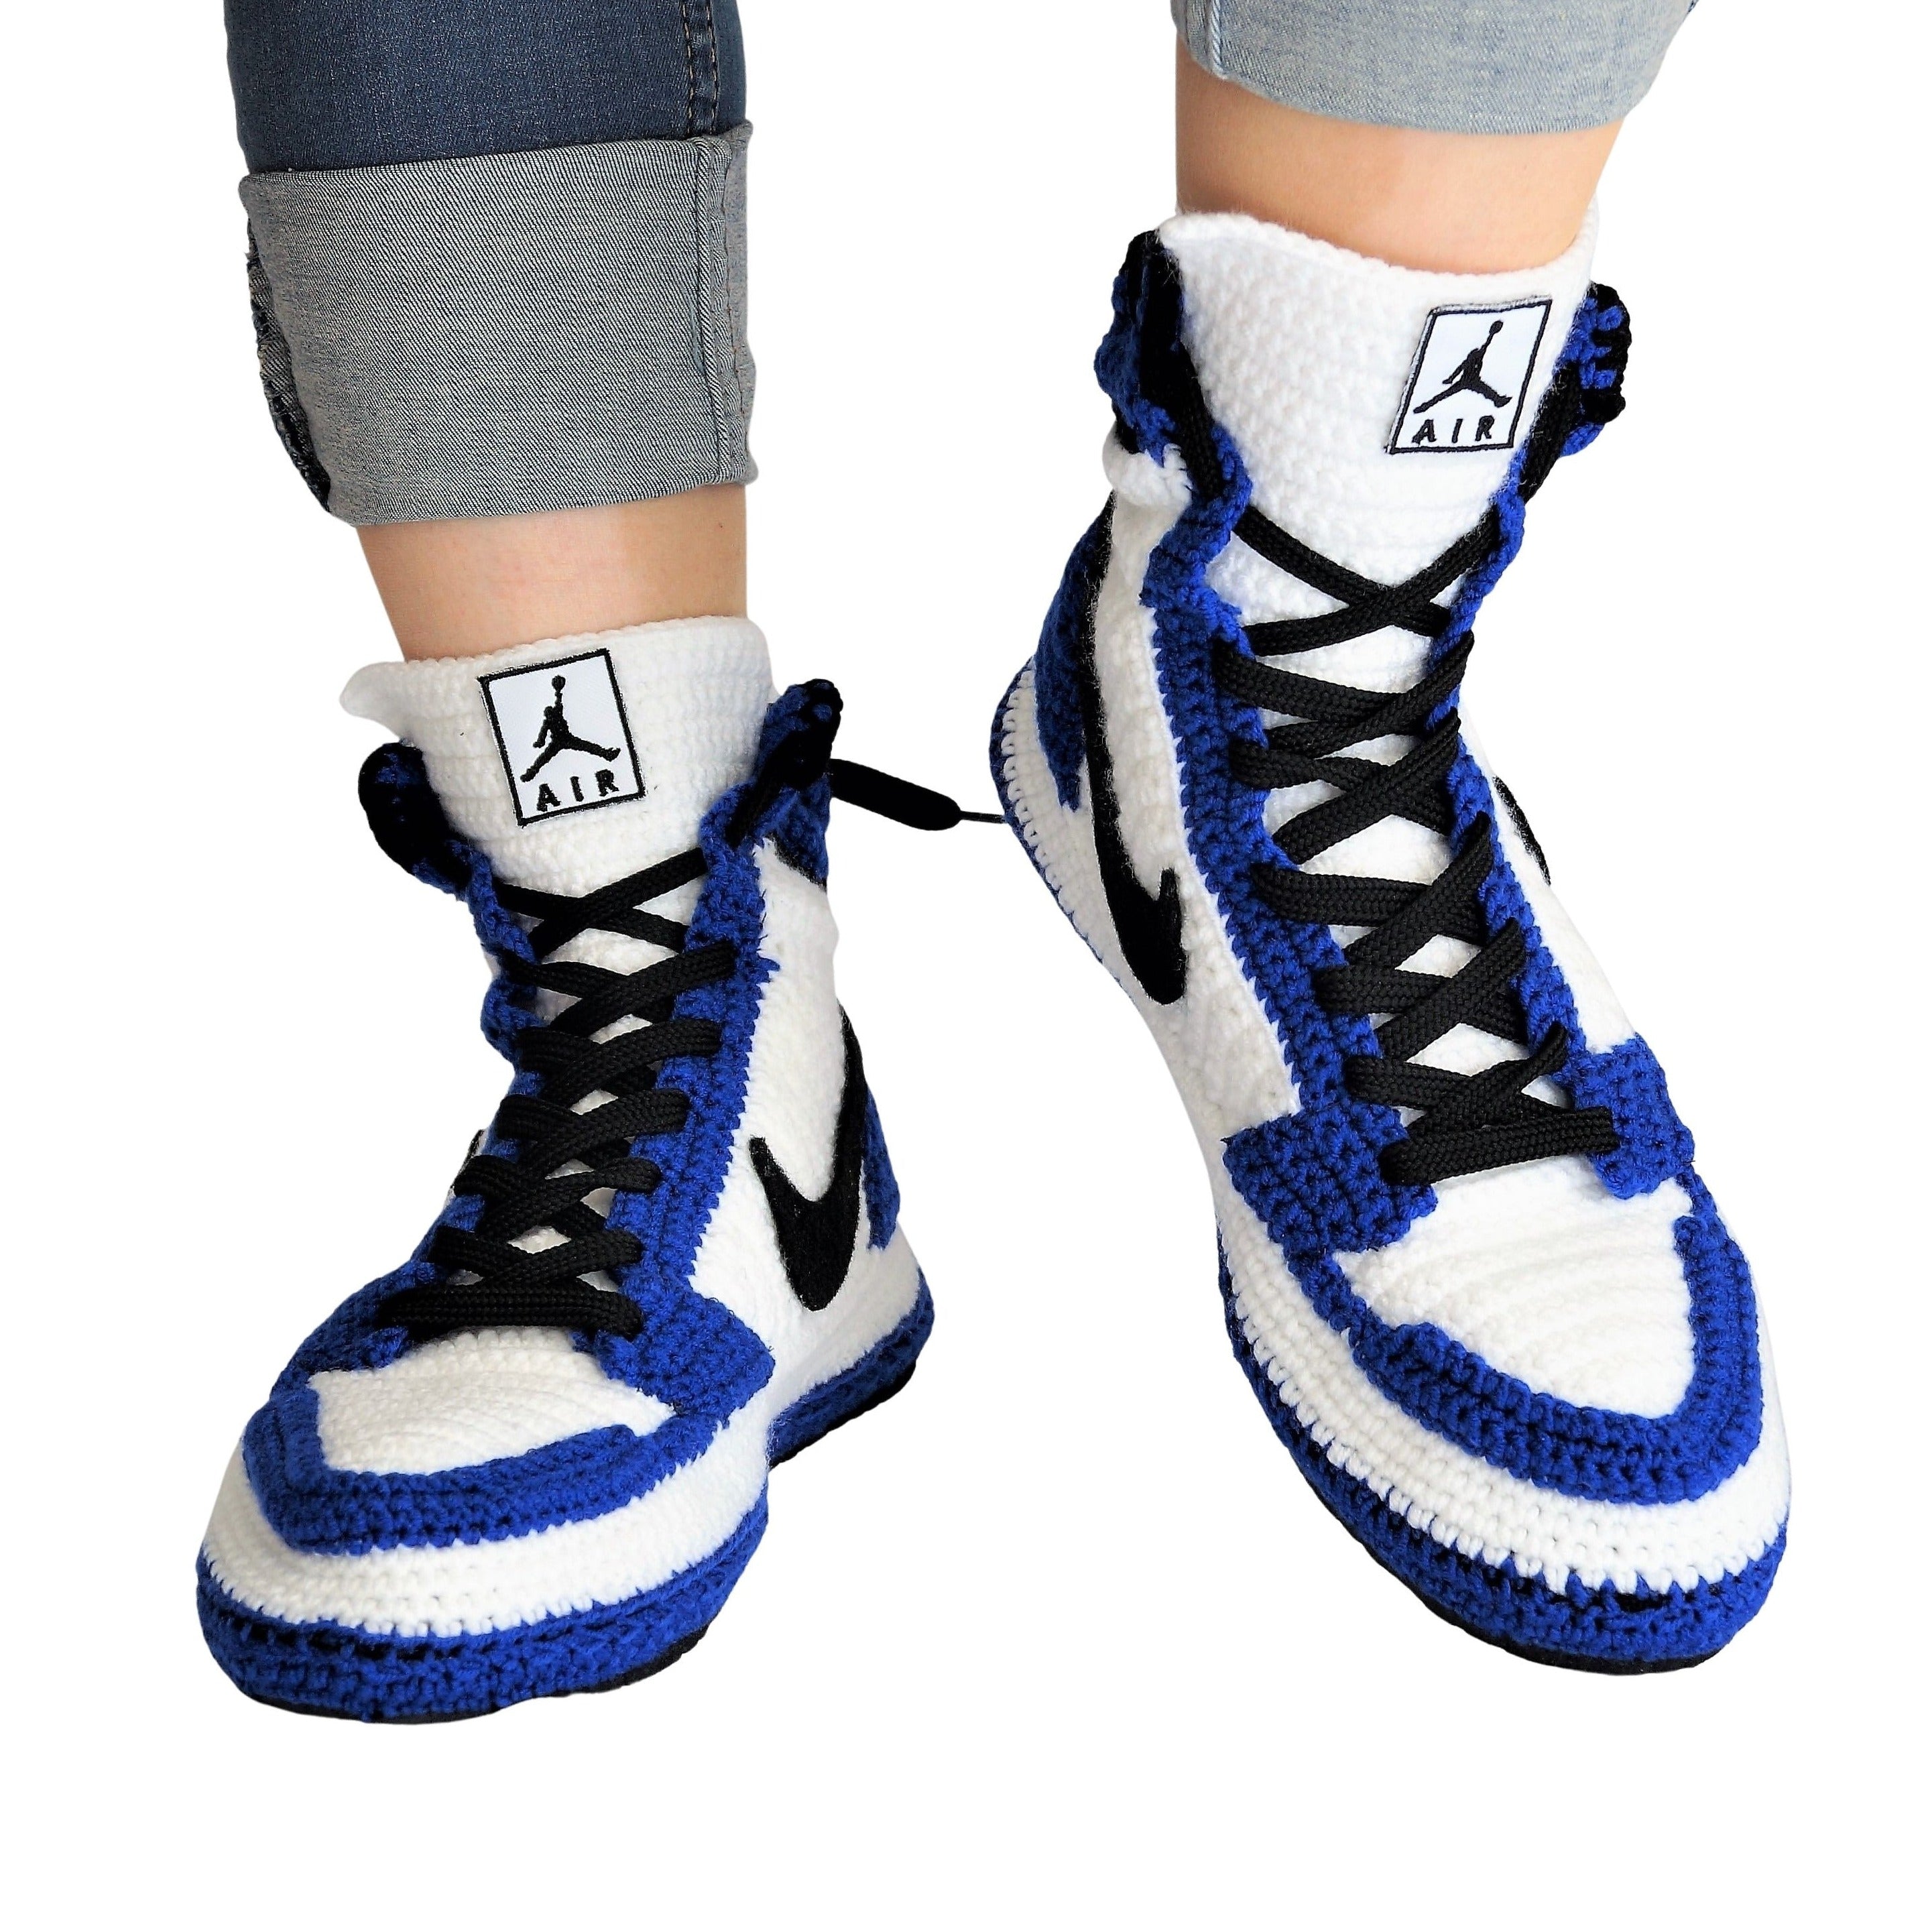 Jordan Smoke Grey Sneakers Slippers Cute Plush Basketball Shoes – By Seay